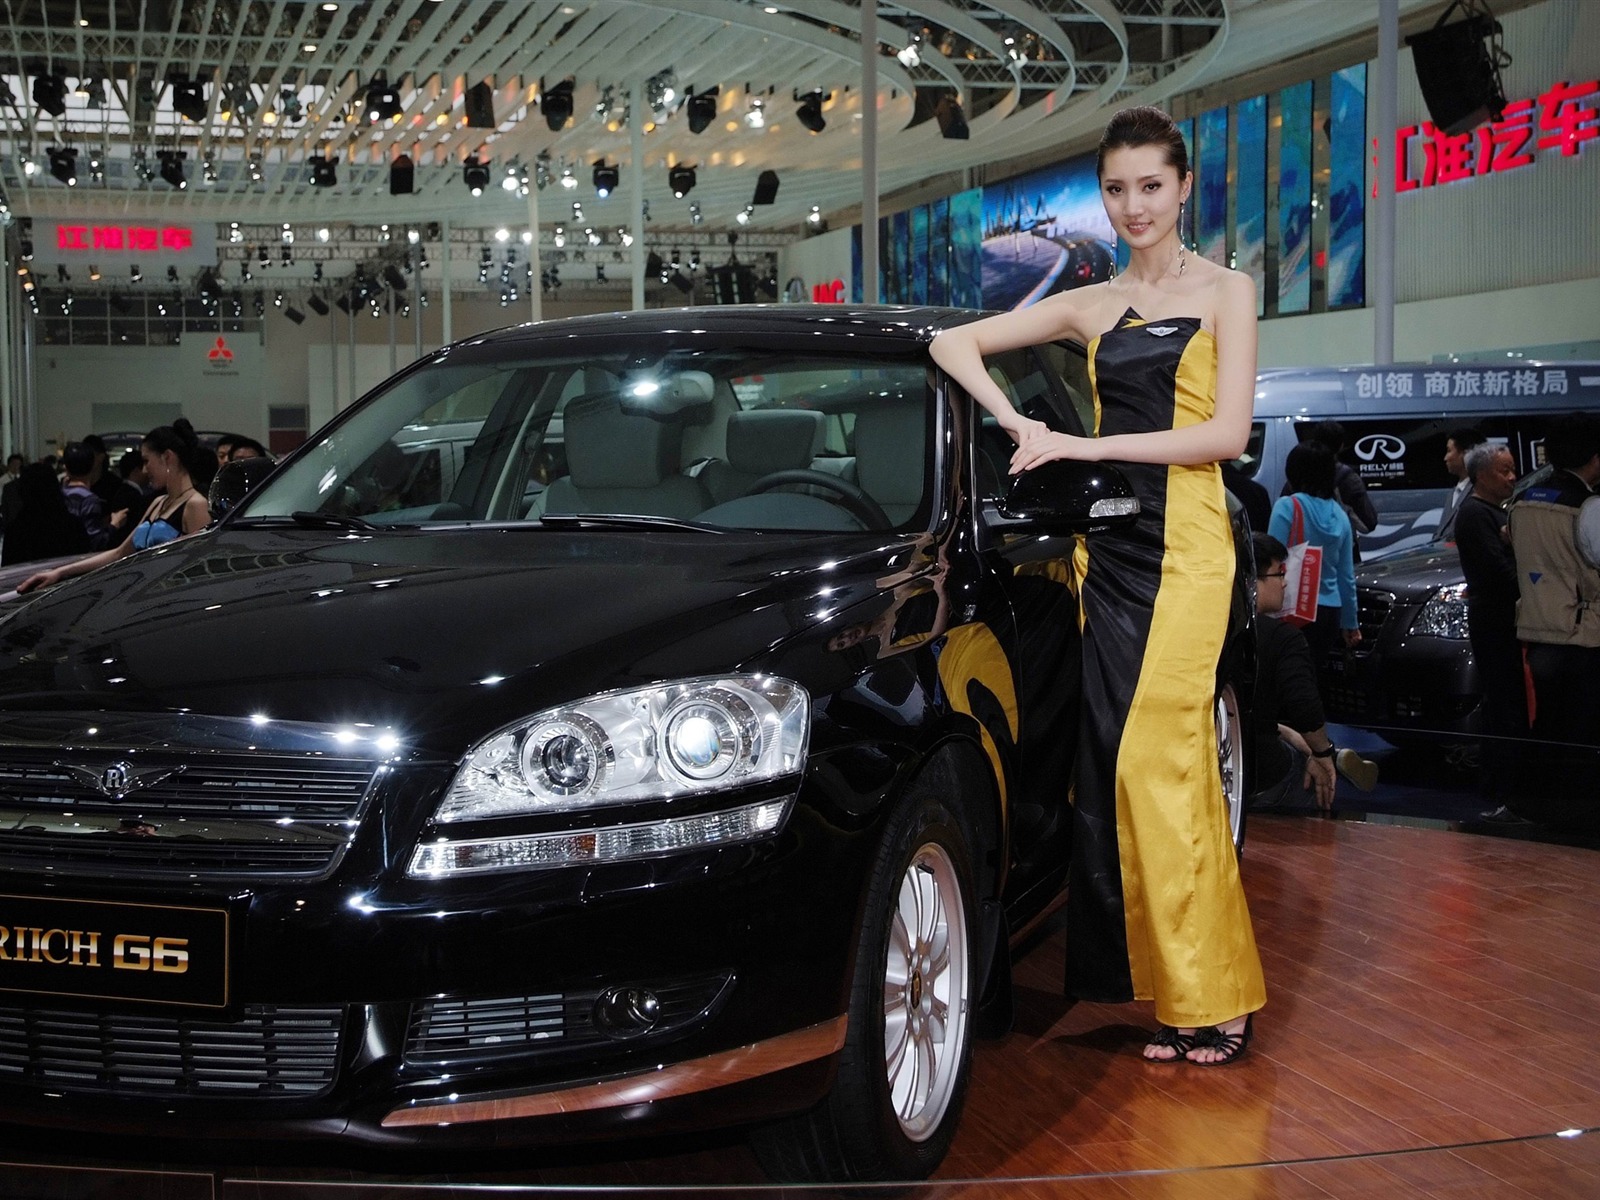 2010 Salón Internacional del Automóvil de Beijing Heung Che belleza (obras barras de refuerzo) #20 - 1600x1200